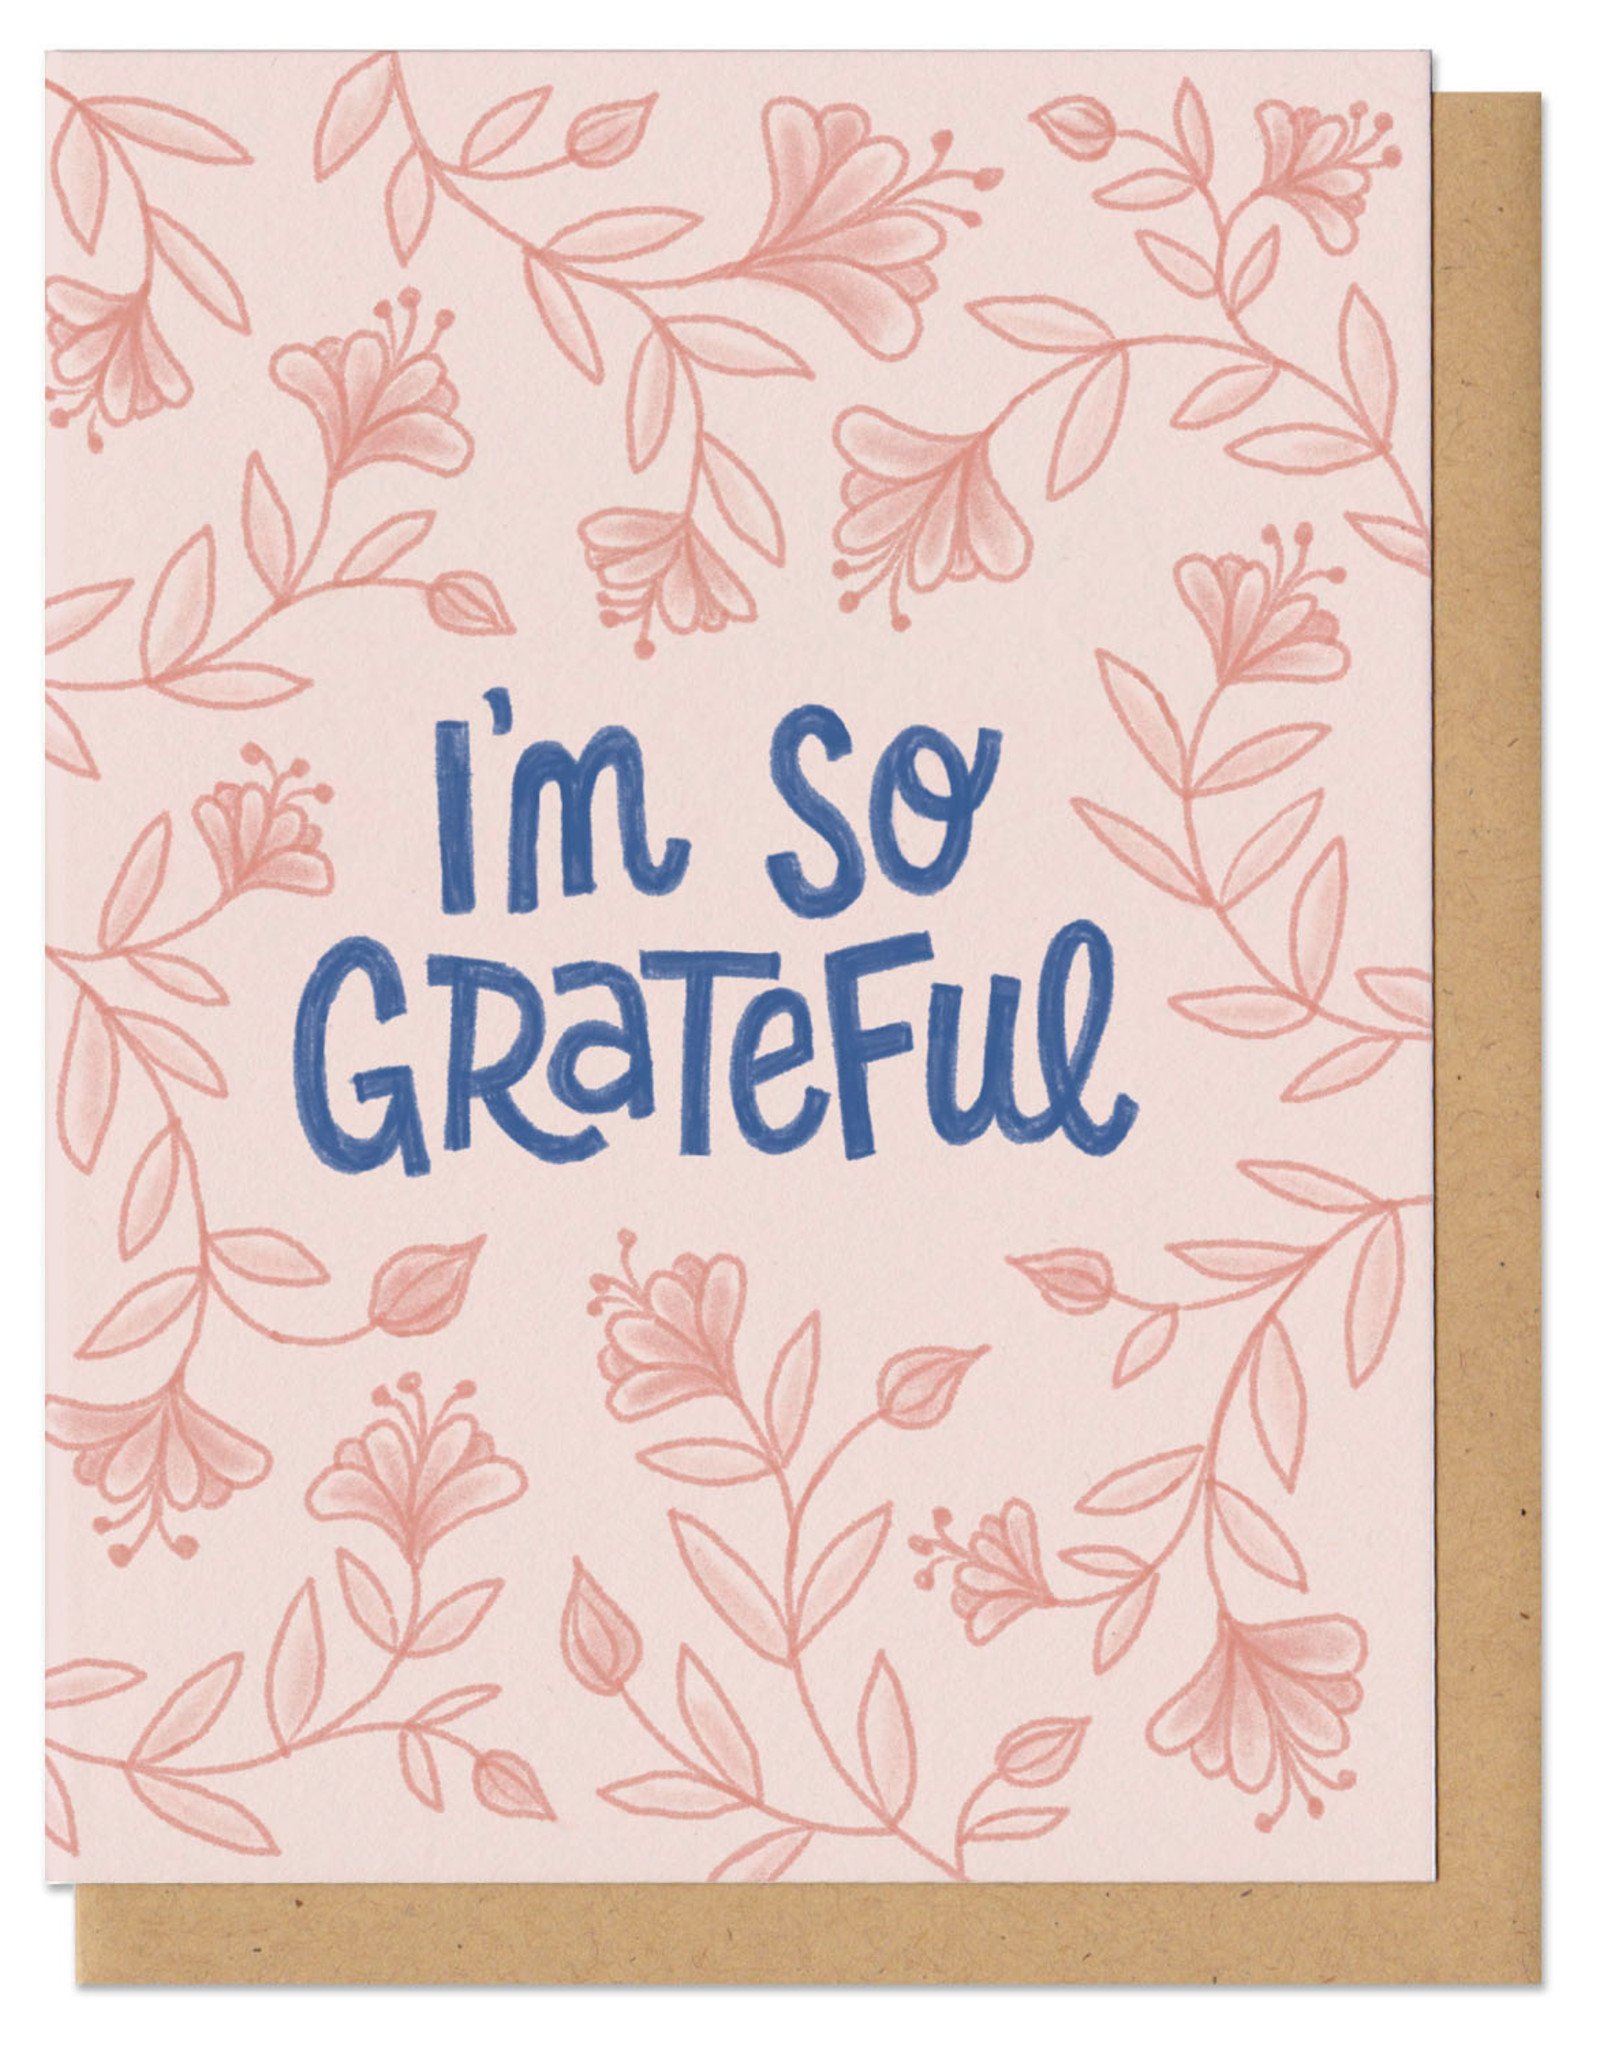 I'm So Grateful Greeting Card